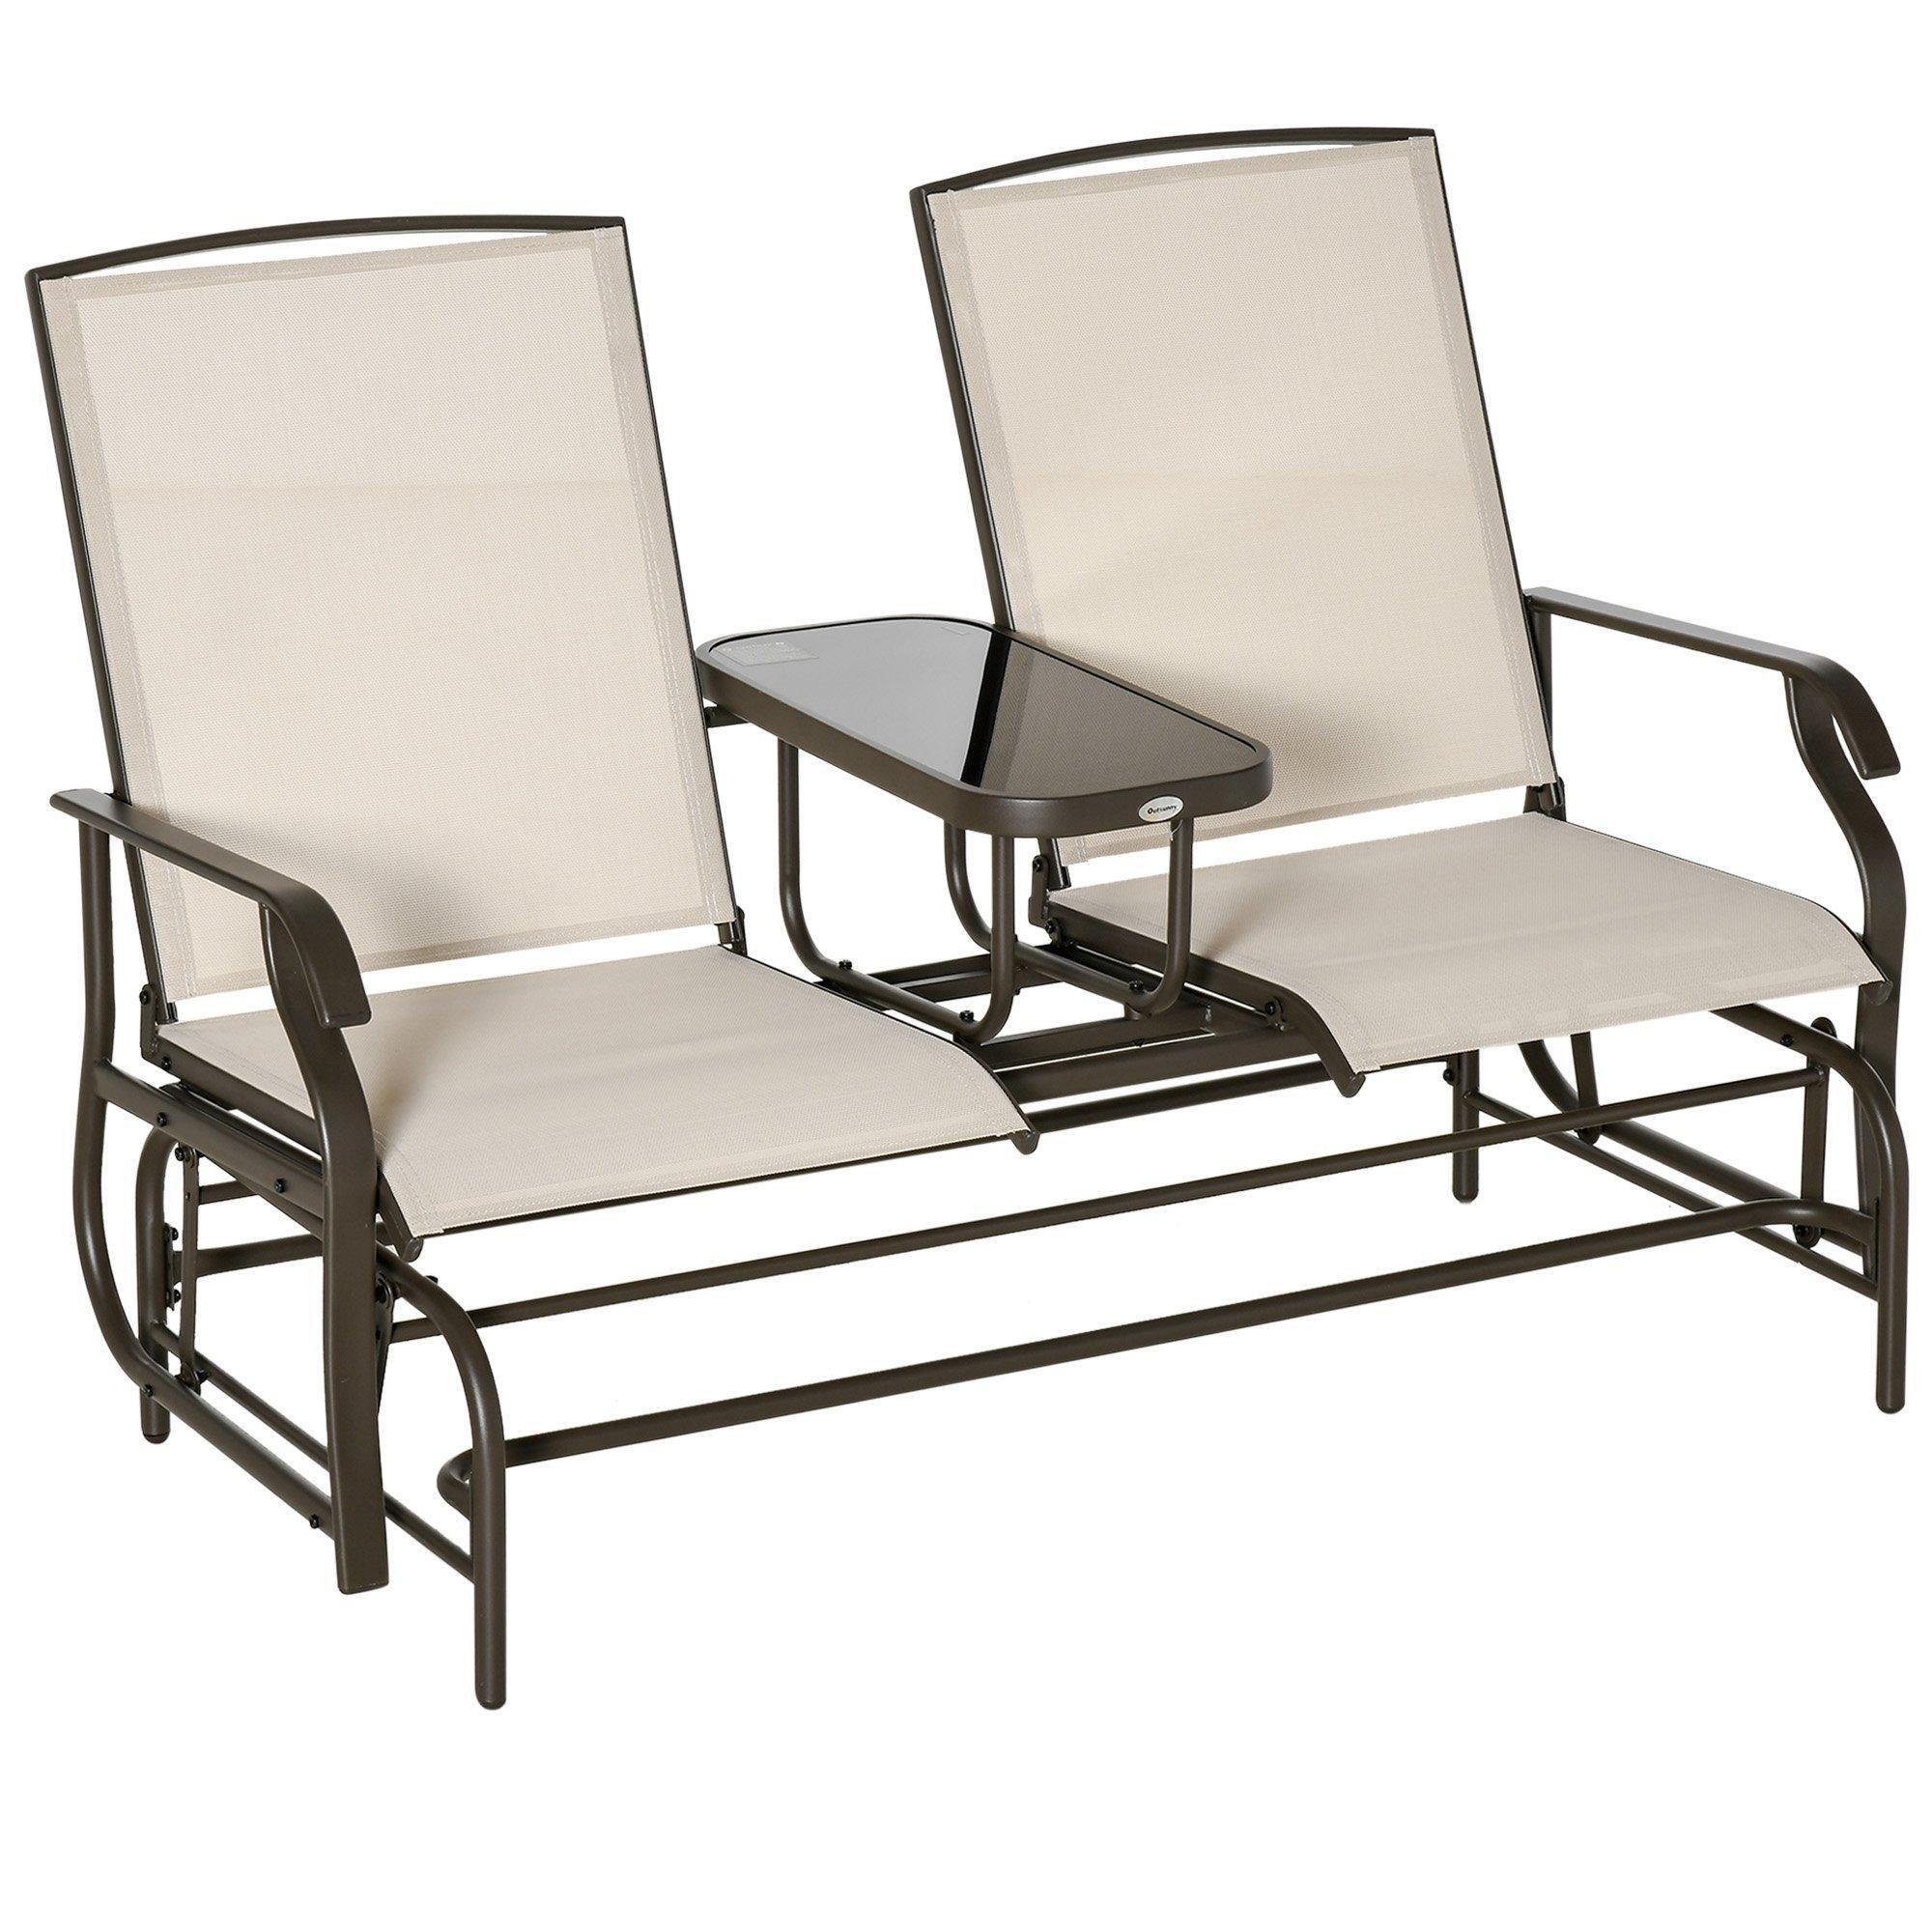 2 Seater Rocker Double Rocking Chair Lounger Outdoor Garden Furniture - image 1